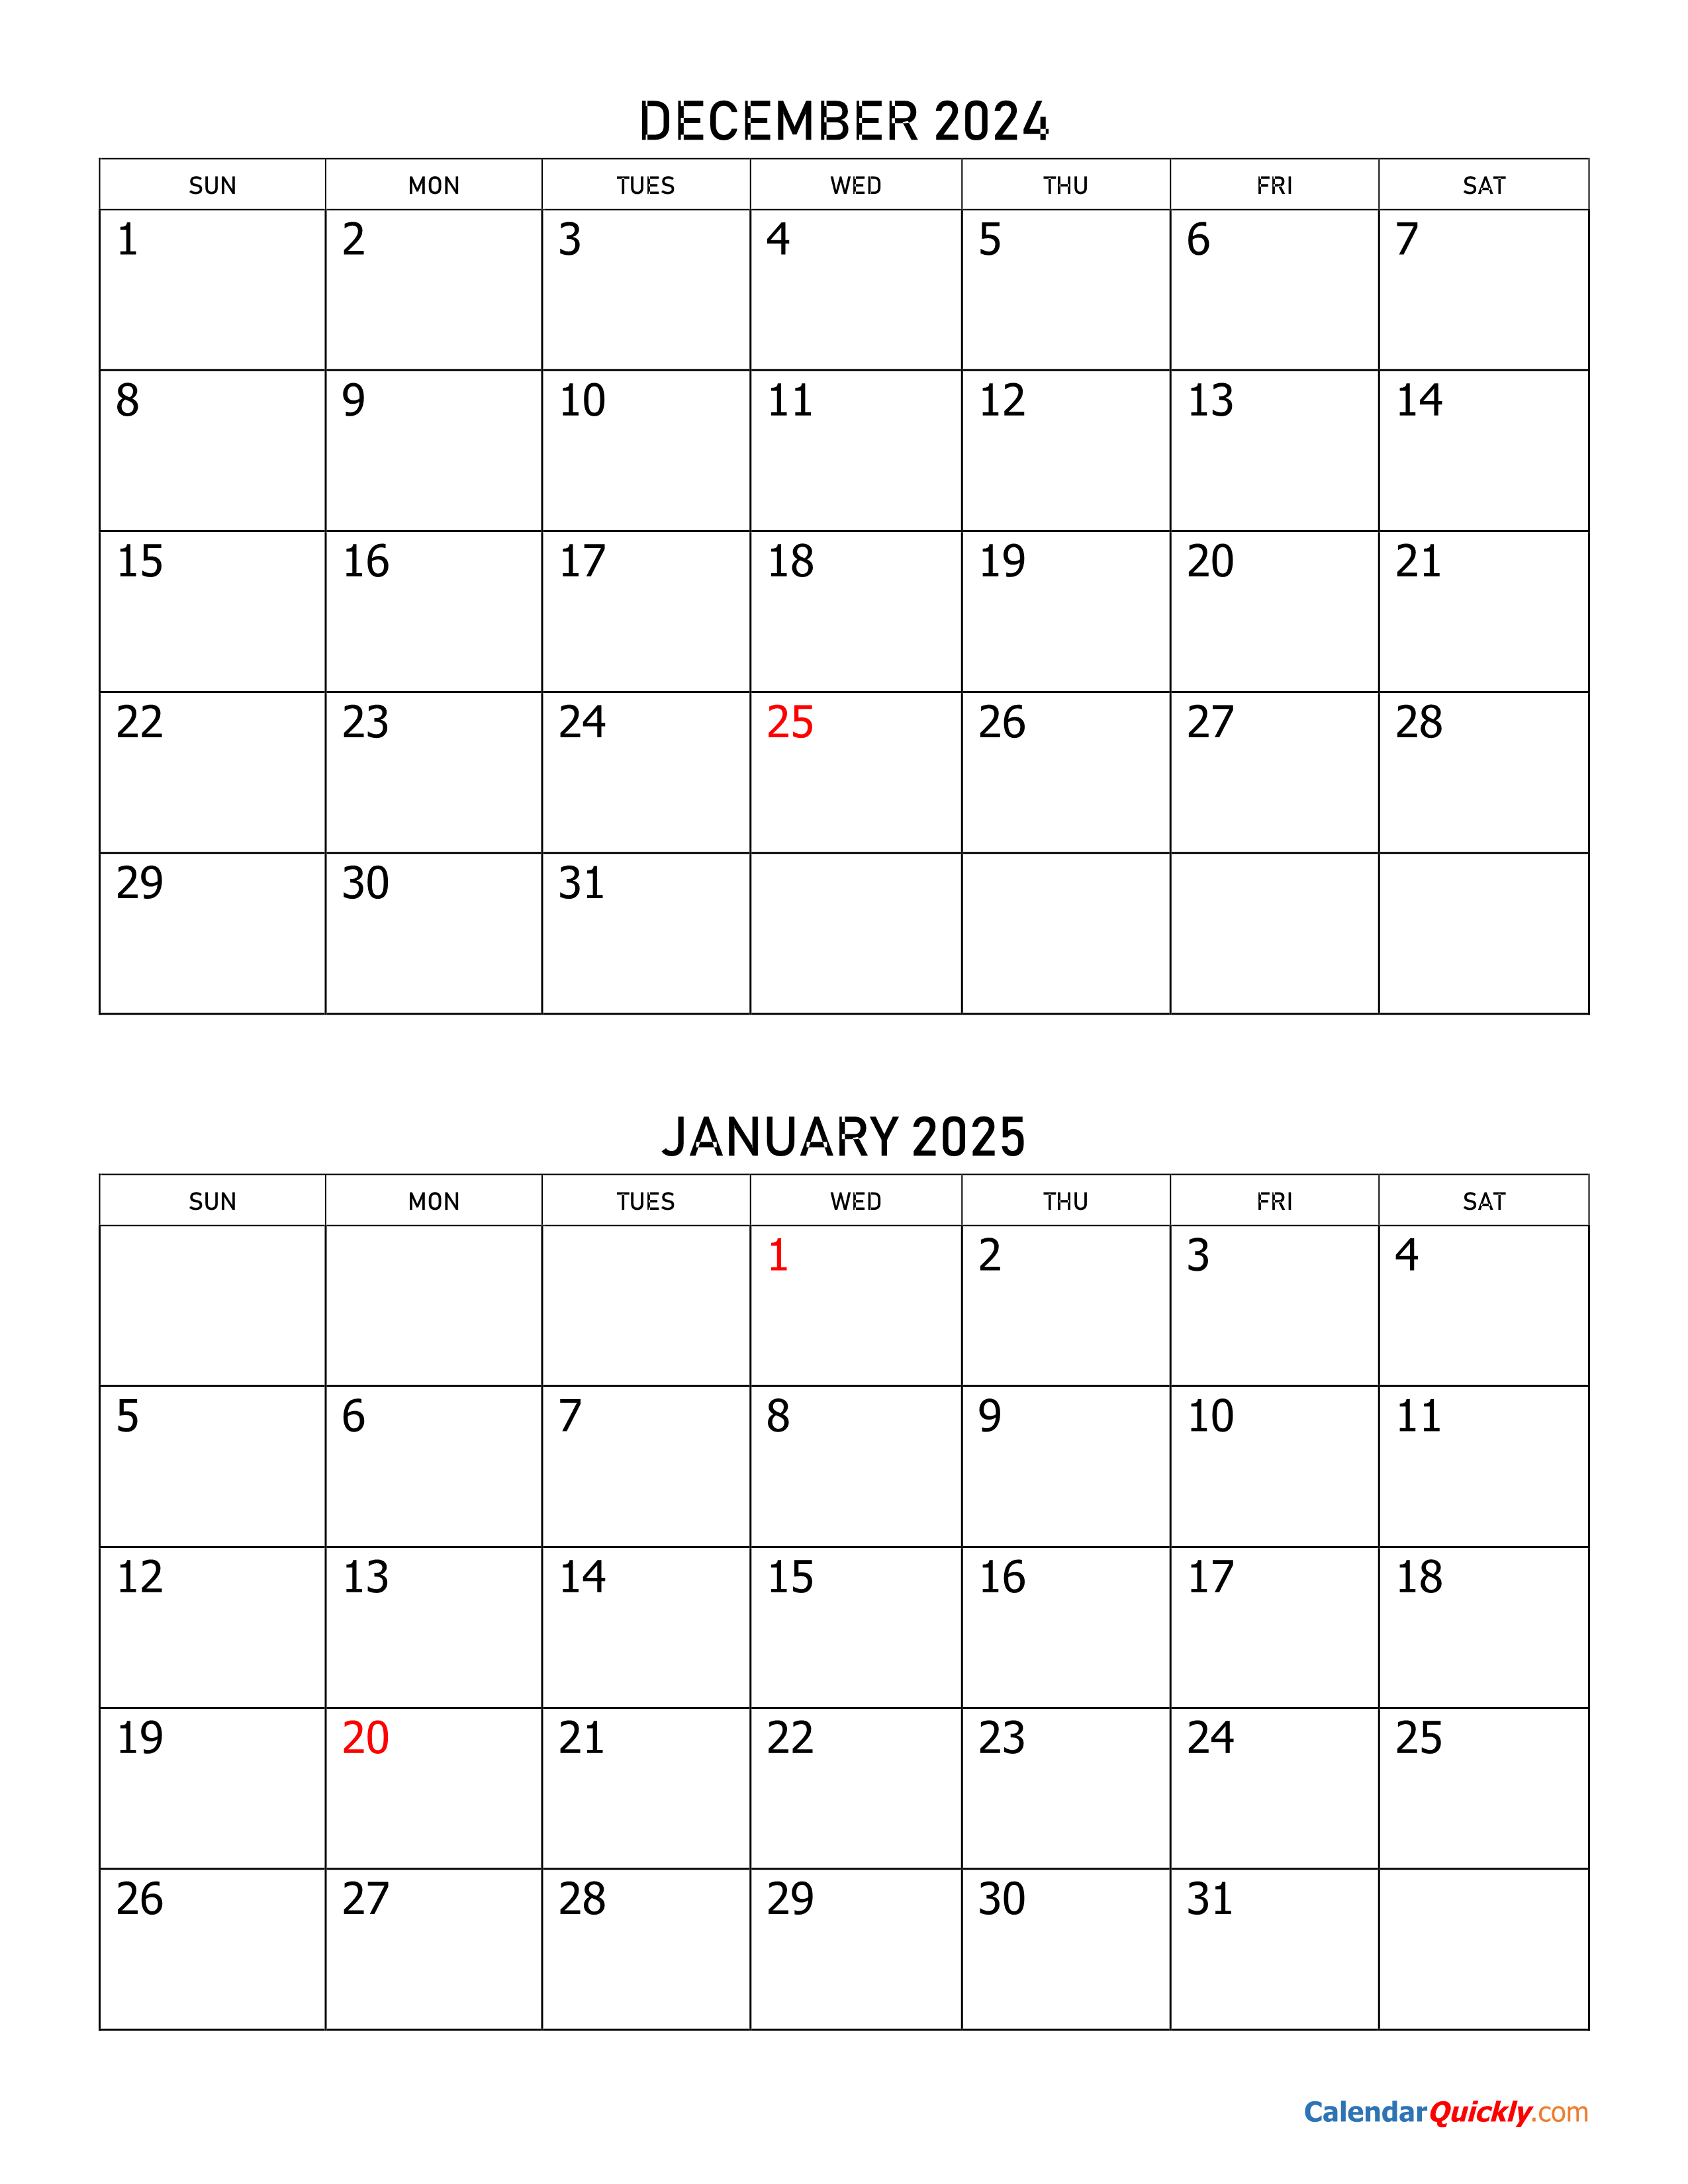 December 2024 and January 2025 Calendar Calendar Quickly